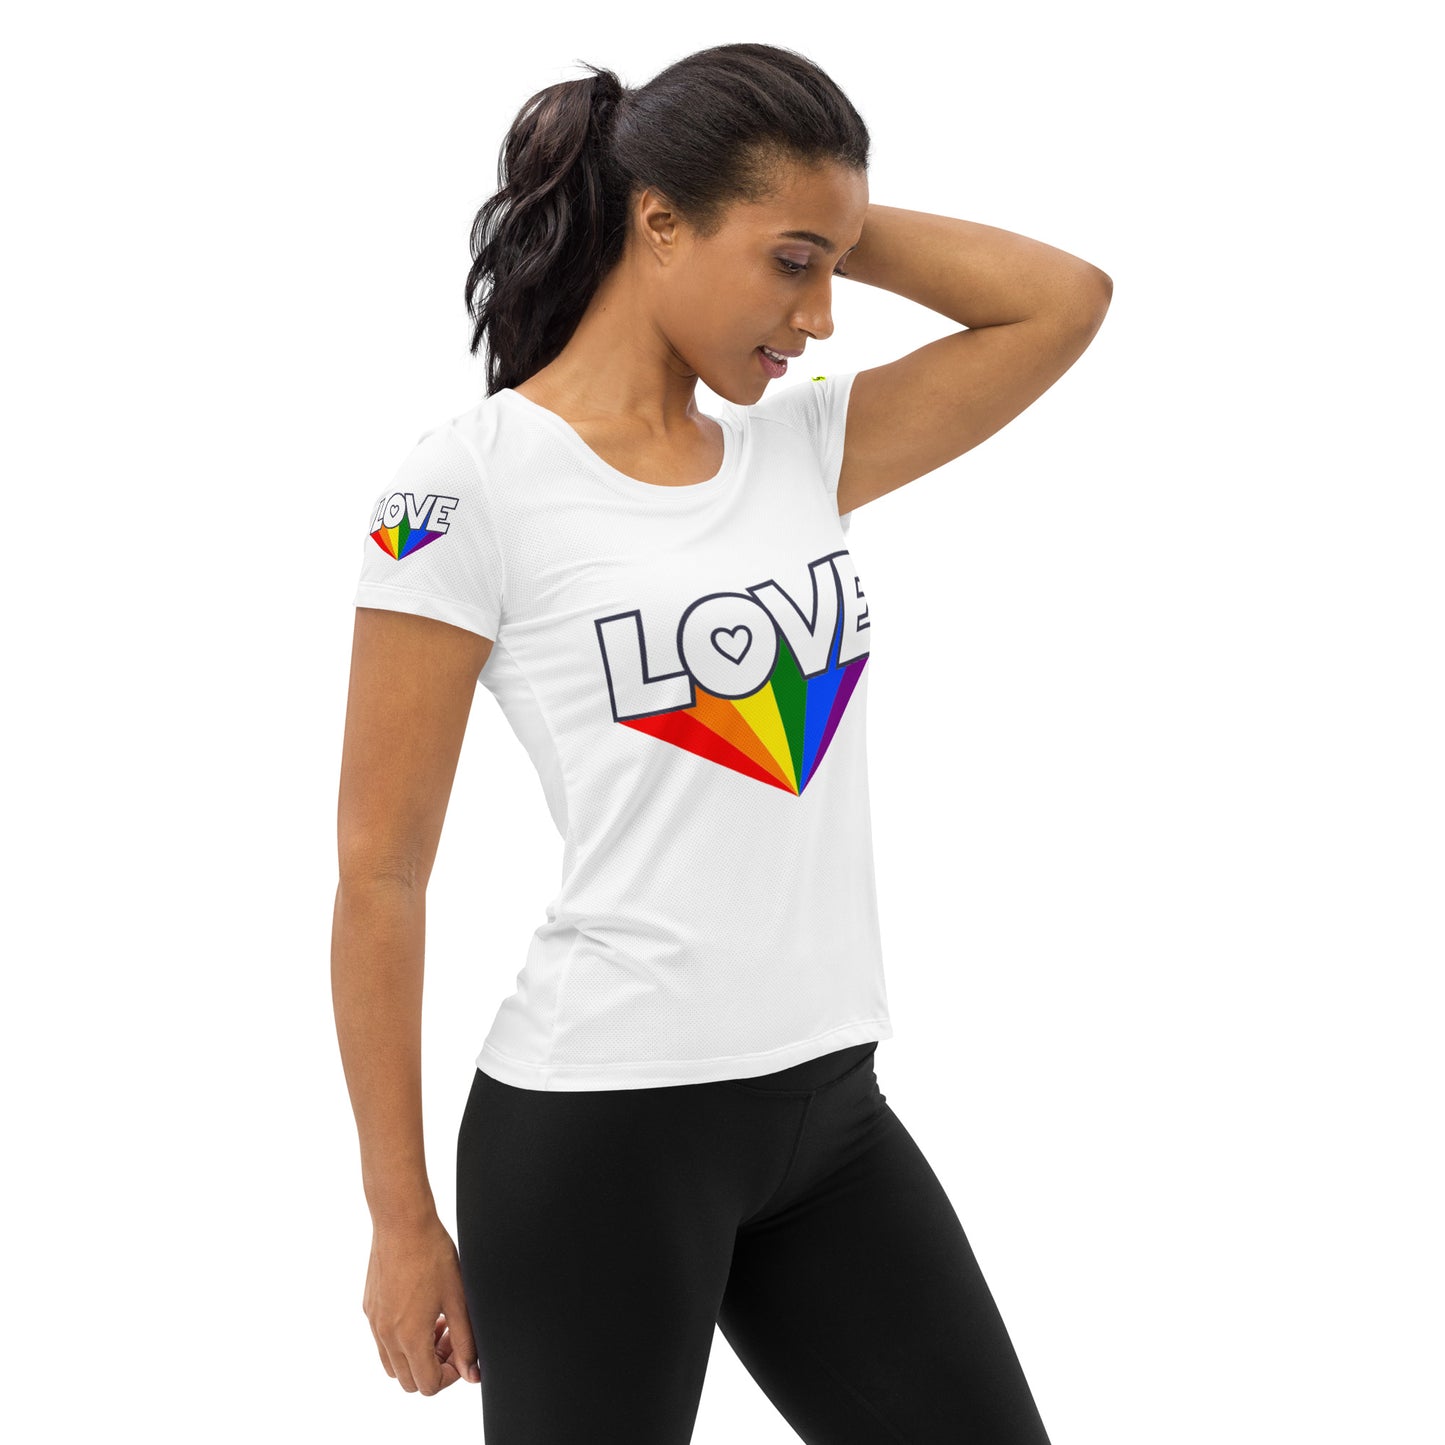 LGBTQIA All-Over Print Women's Athletic T-shirt